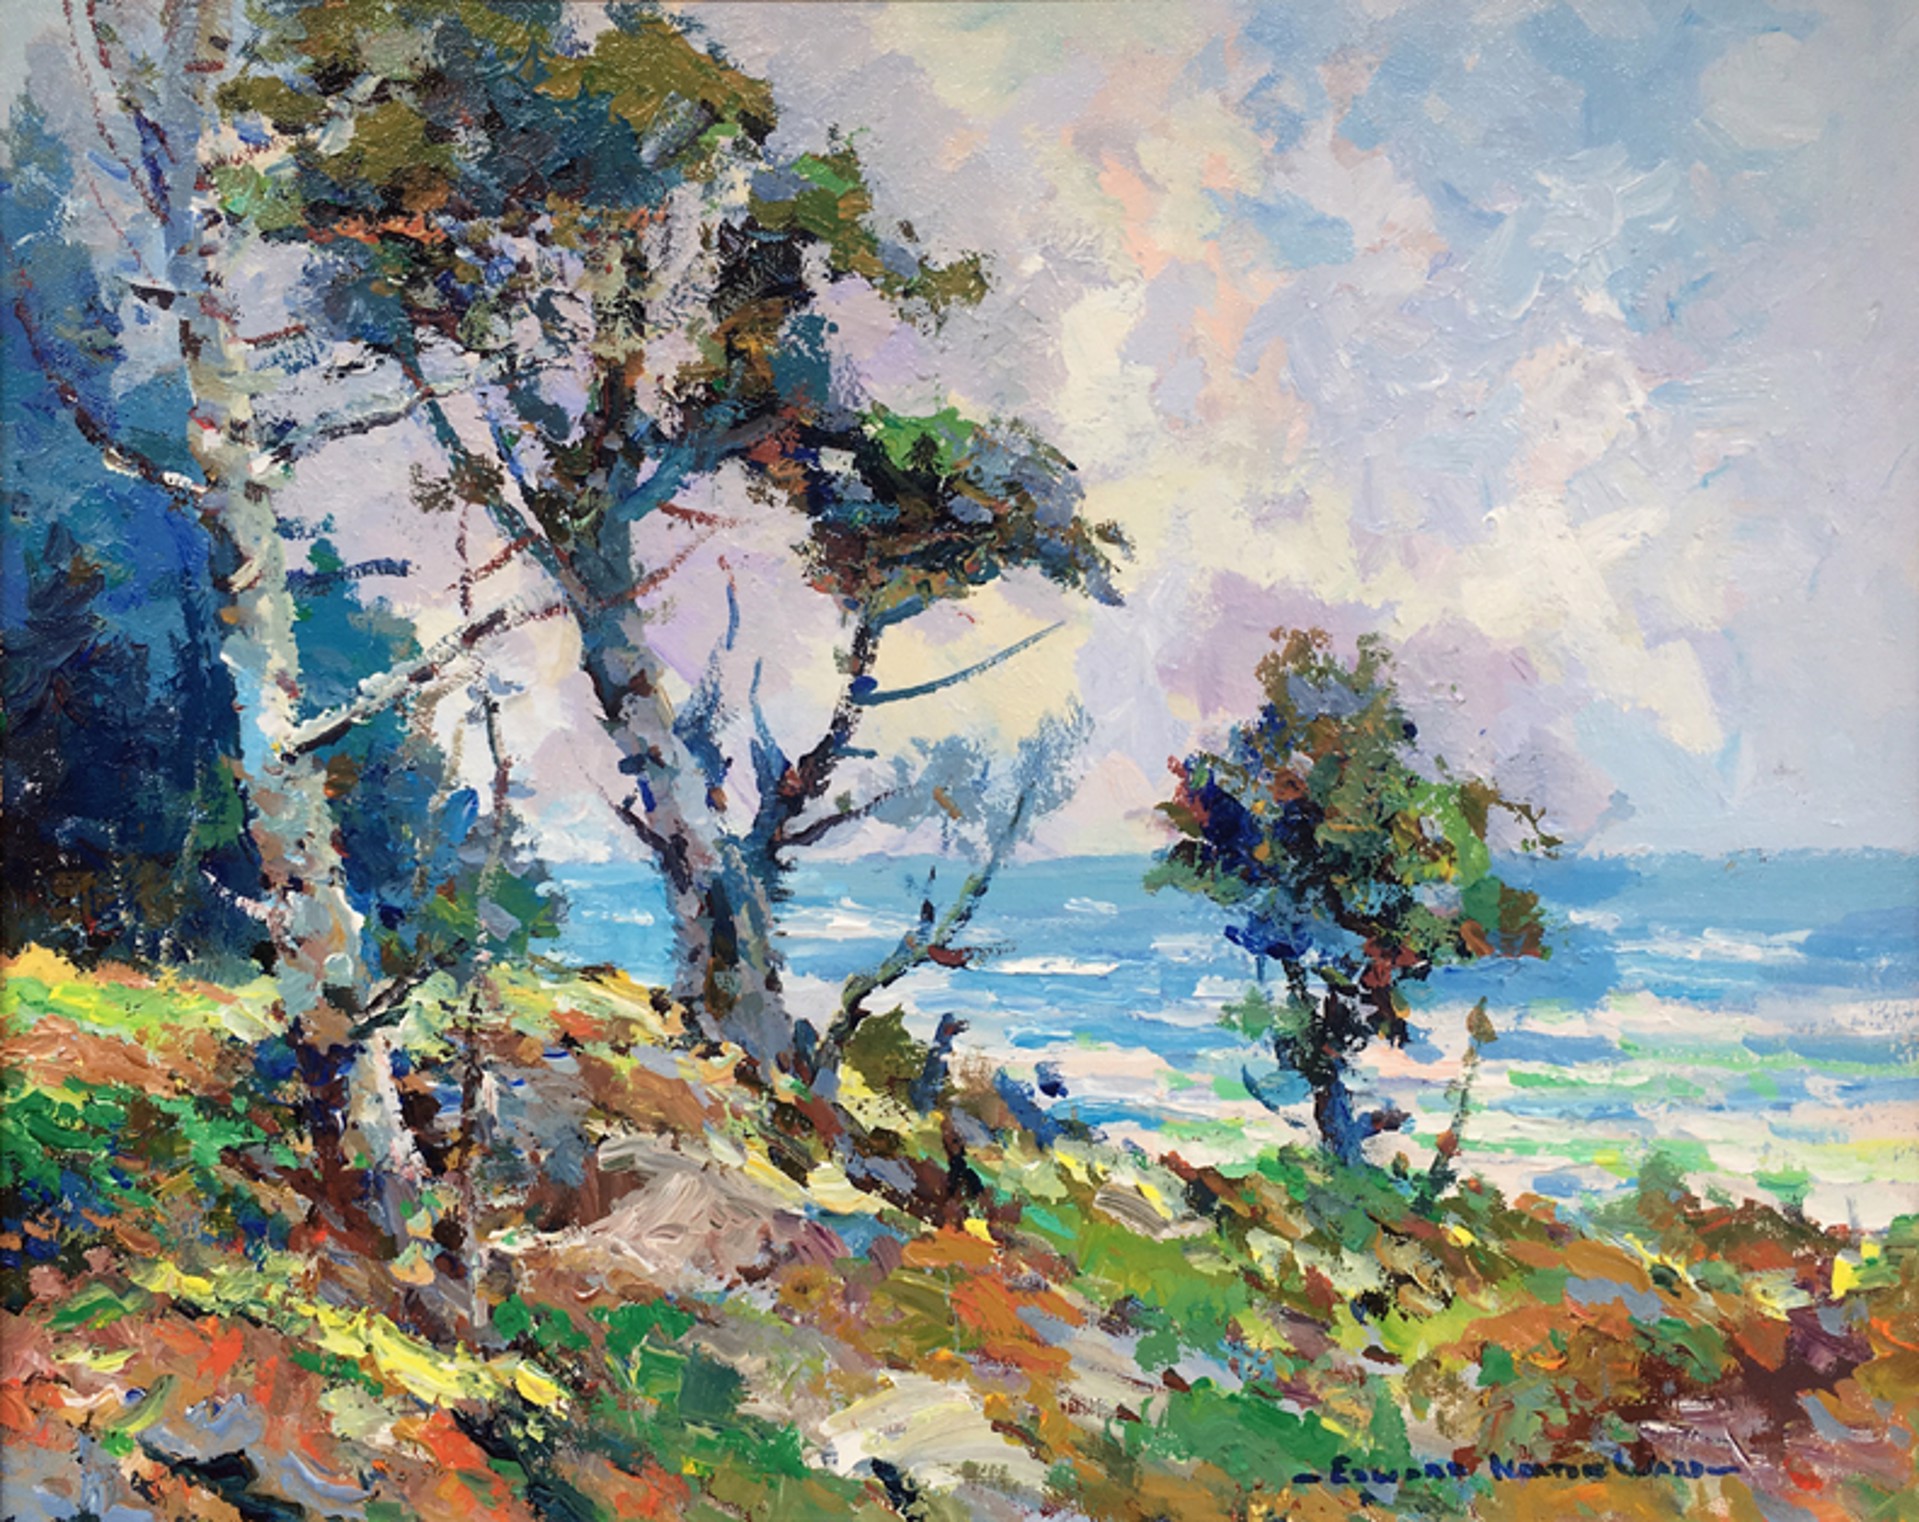 Wind Swept Pines by Edward Norton Ward